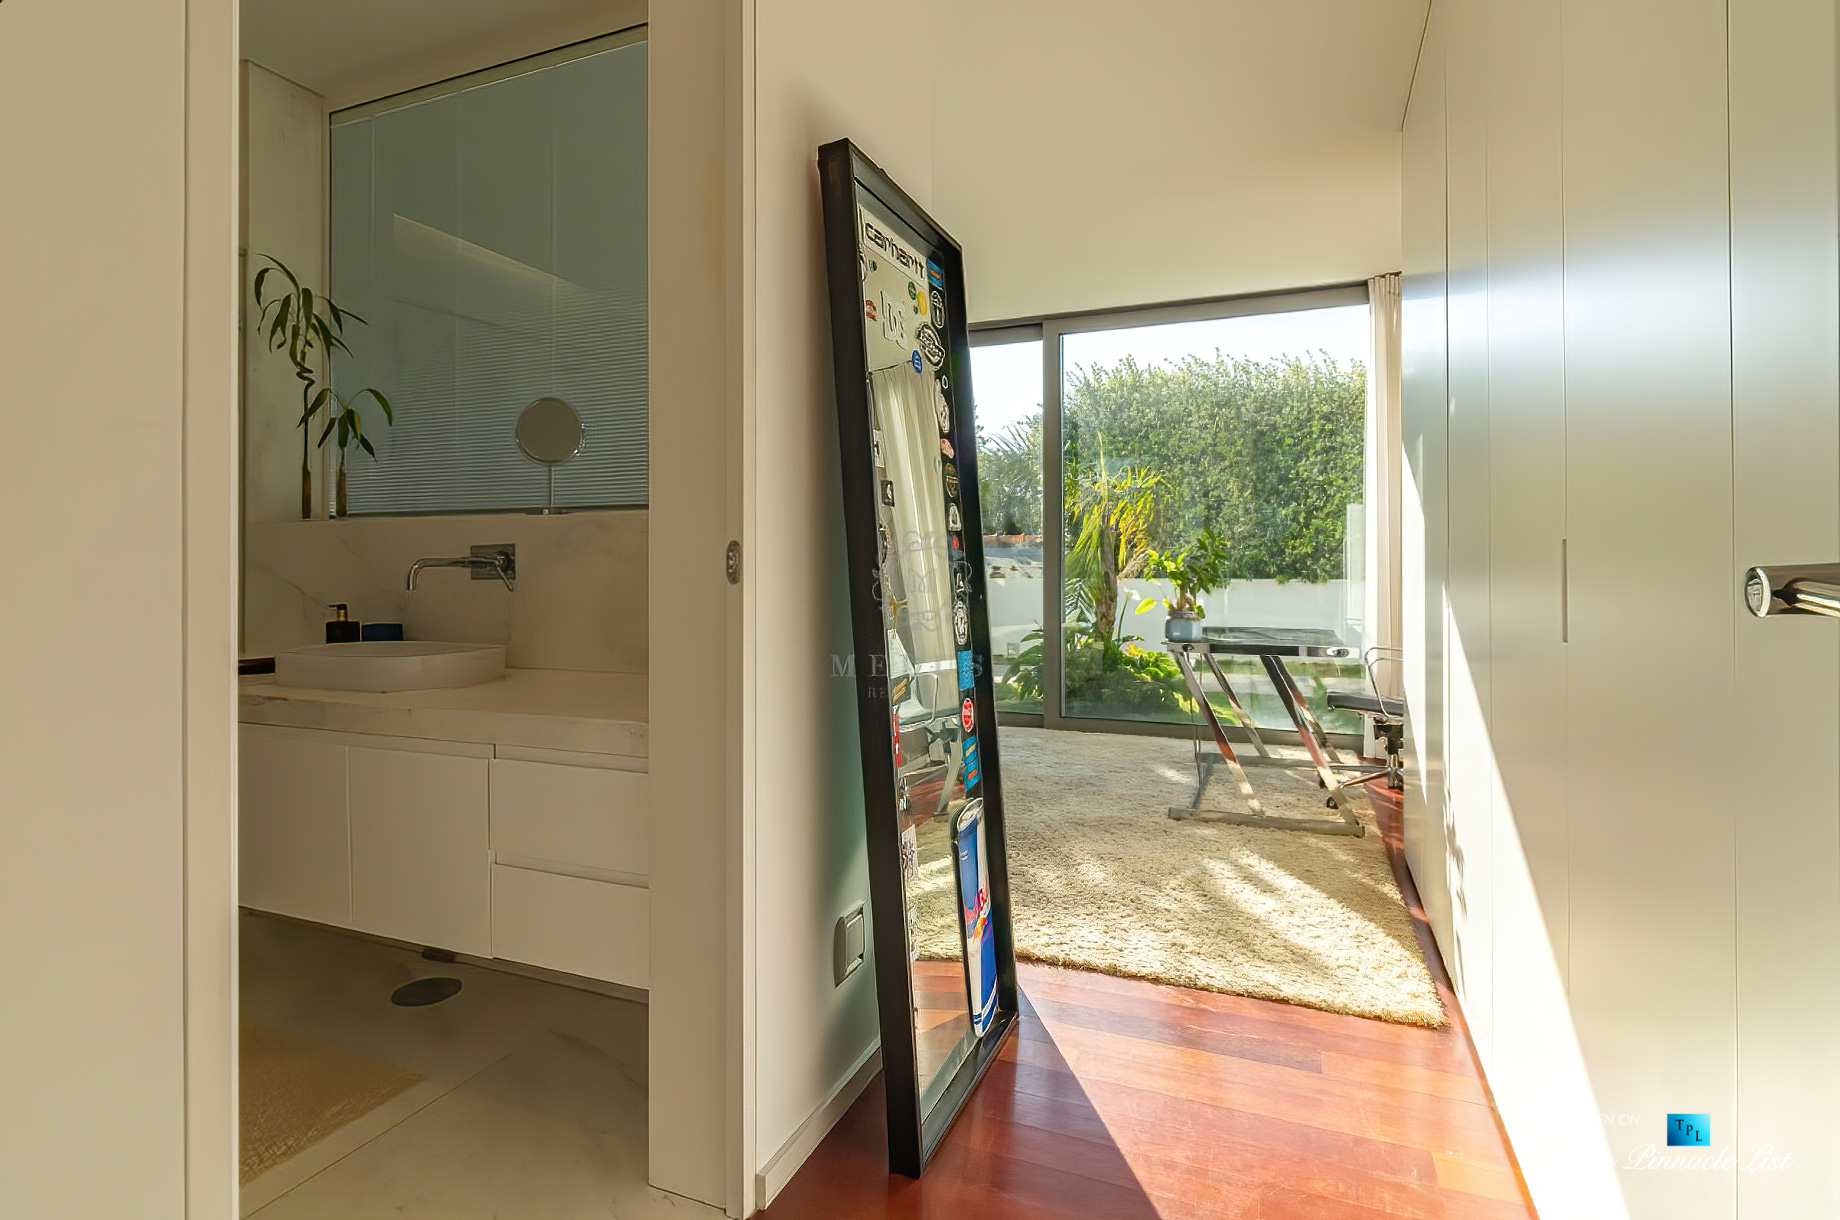 Francelos Beach Luxury T5 Villa - Porto, Portugal - Bedroom and Bathroom Entrance - Luxury Real Estate – Modern Home